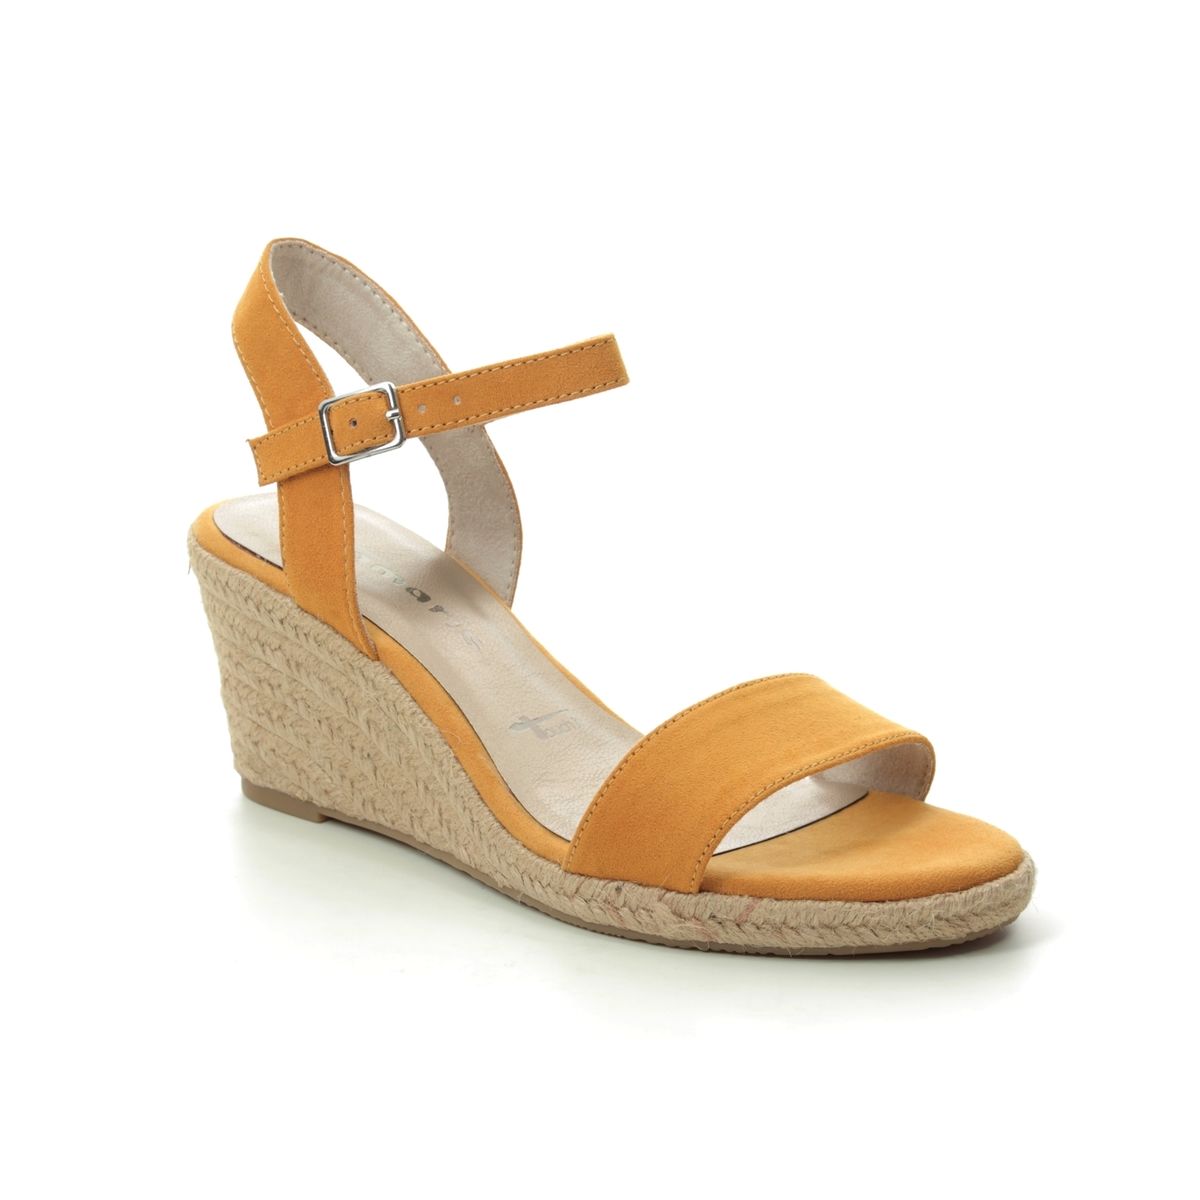 Tamaris Livia 91 28300-24-684 Yellow Wedge Sandals